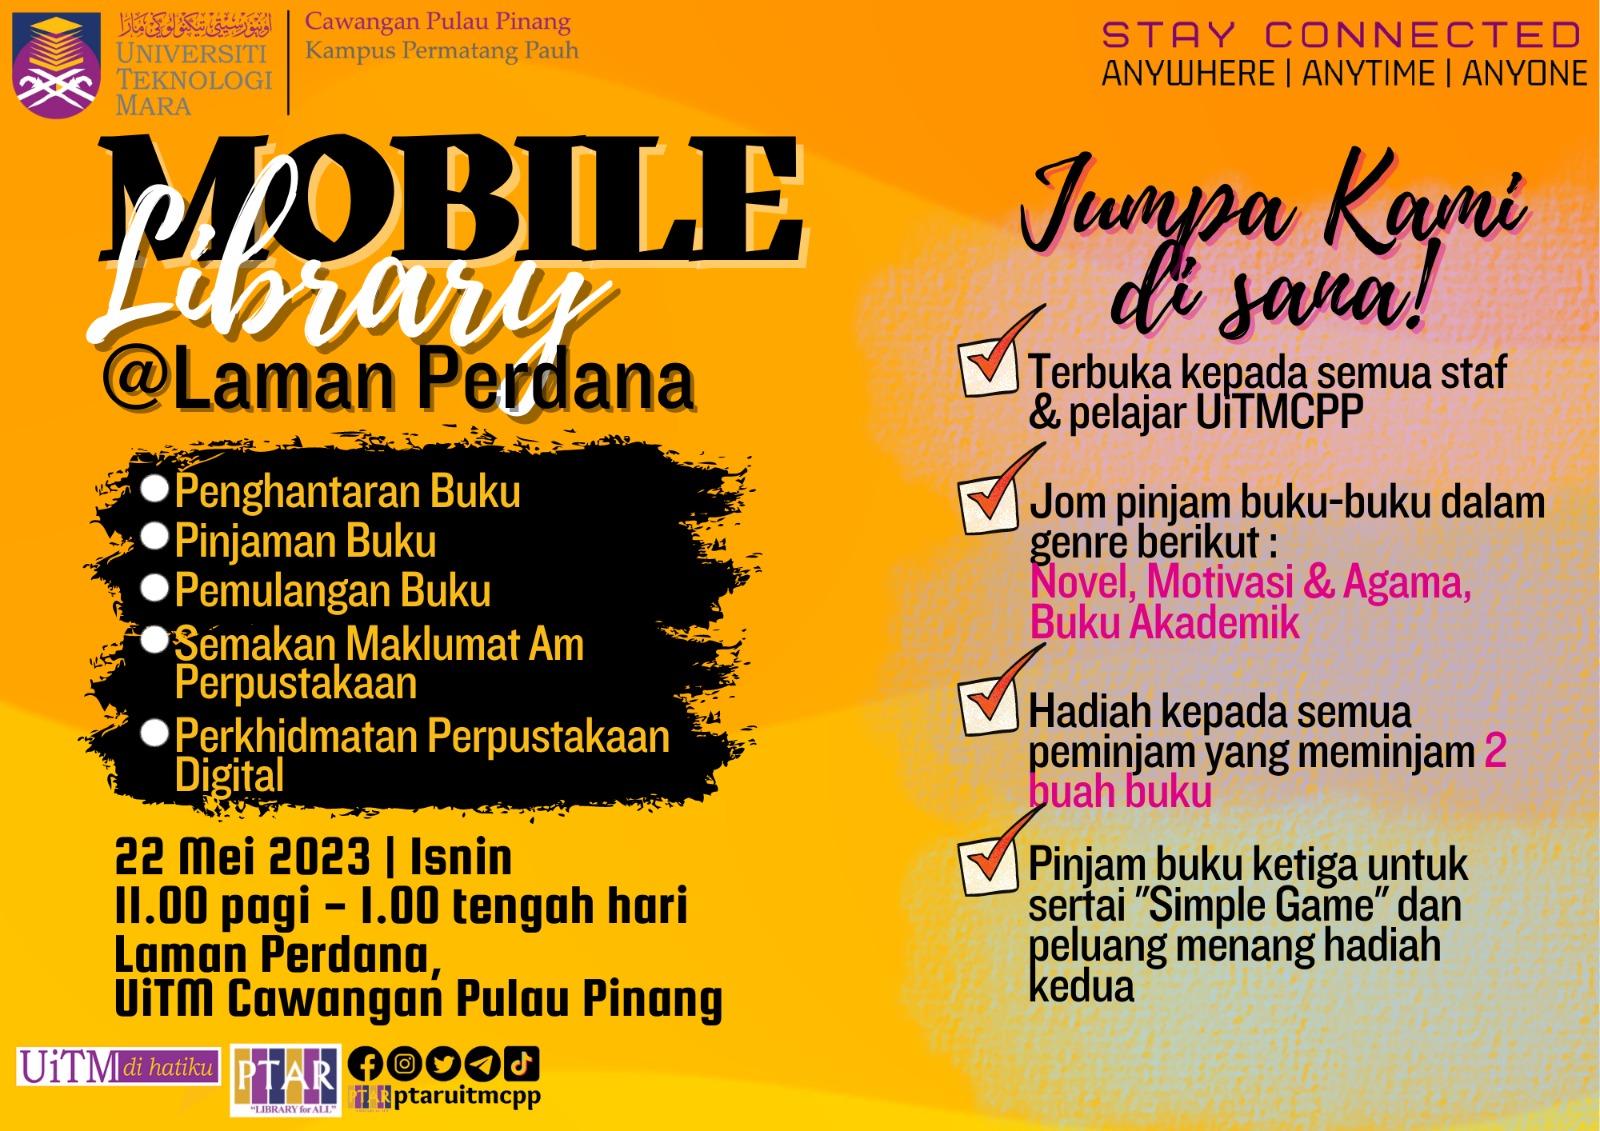 Program Mobile Library@Laman Perdana